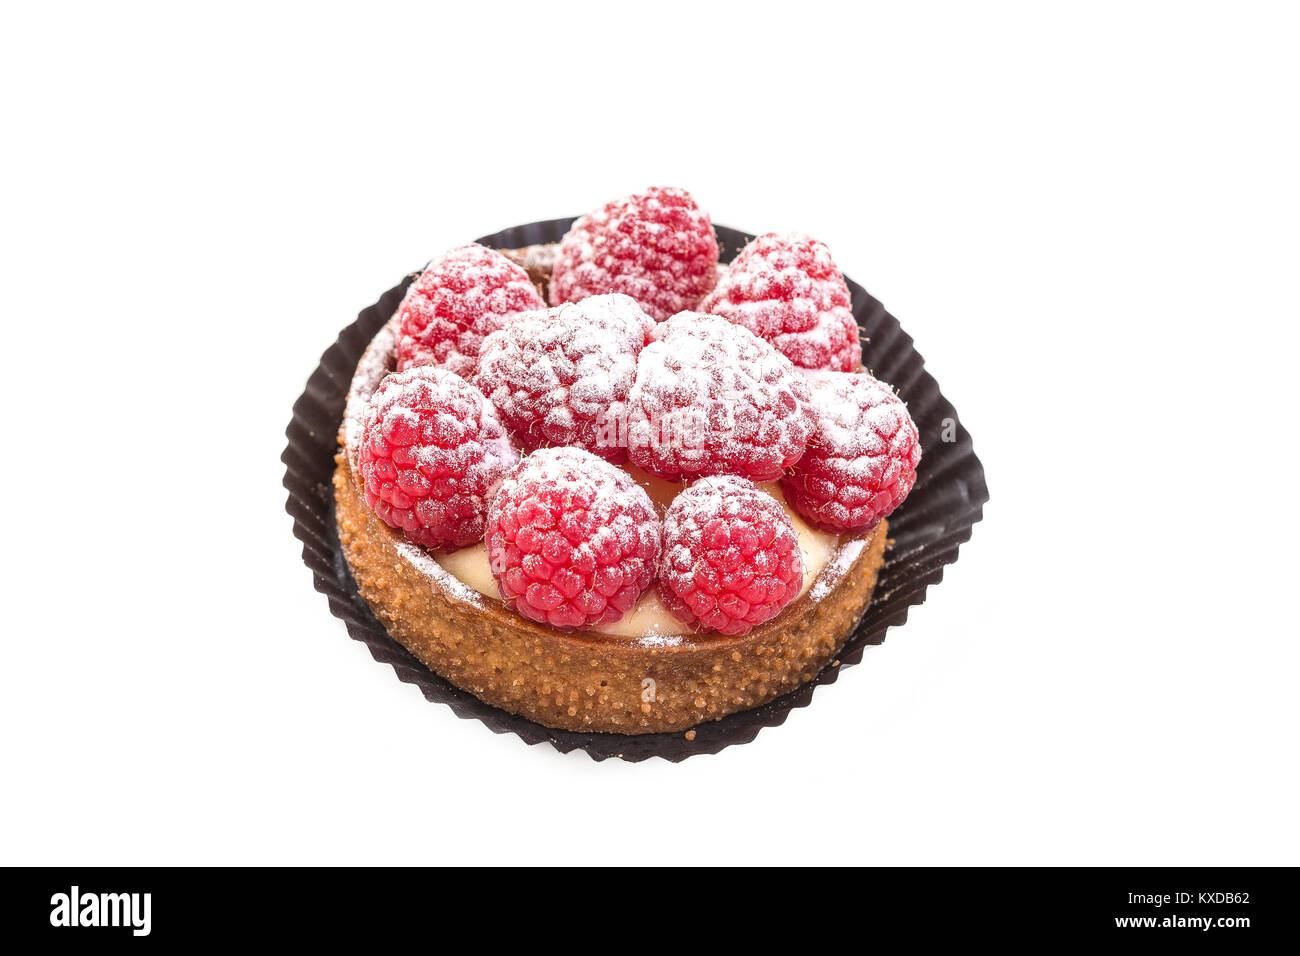 Pastry with cream, jam, raspberries and powdered sugar on white background Stock Photo